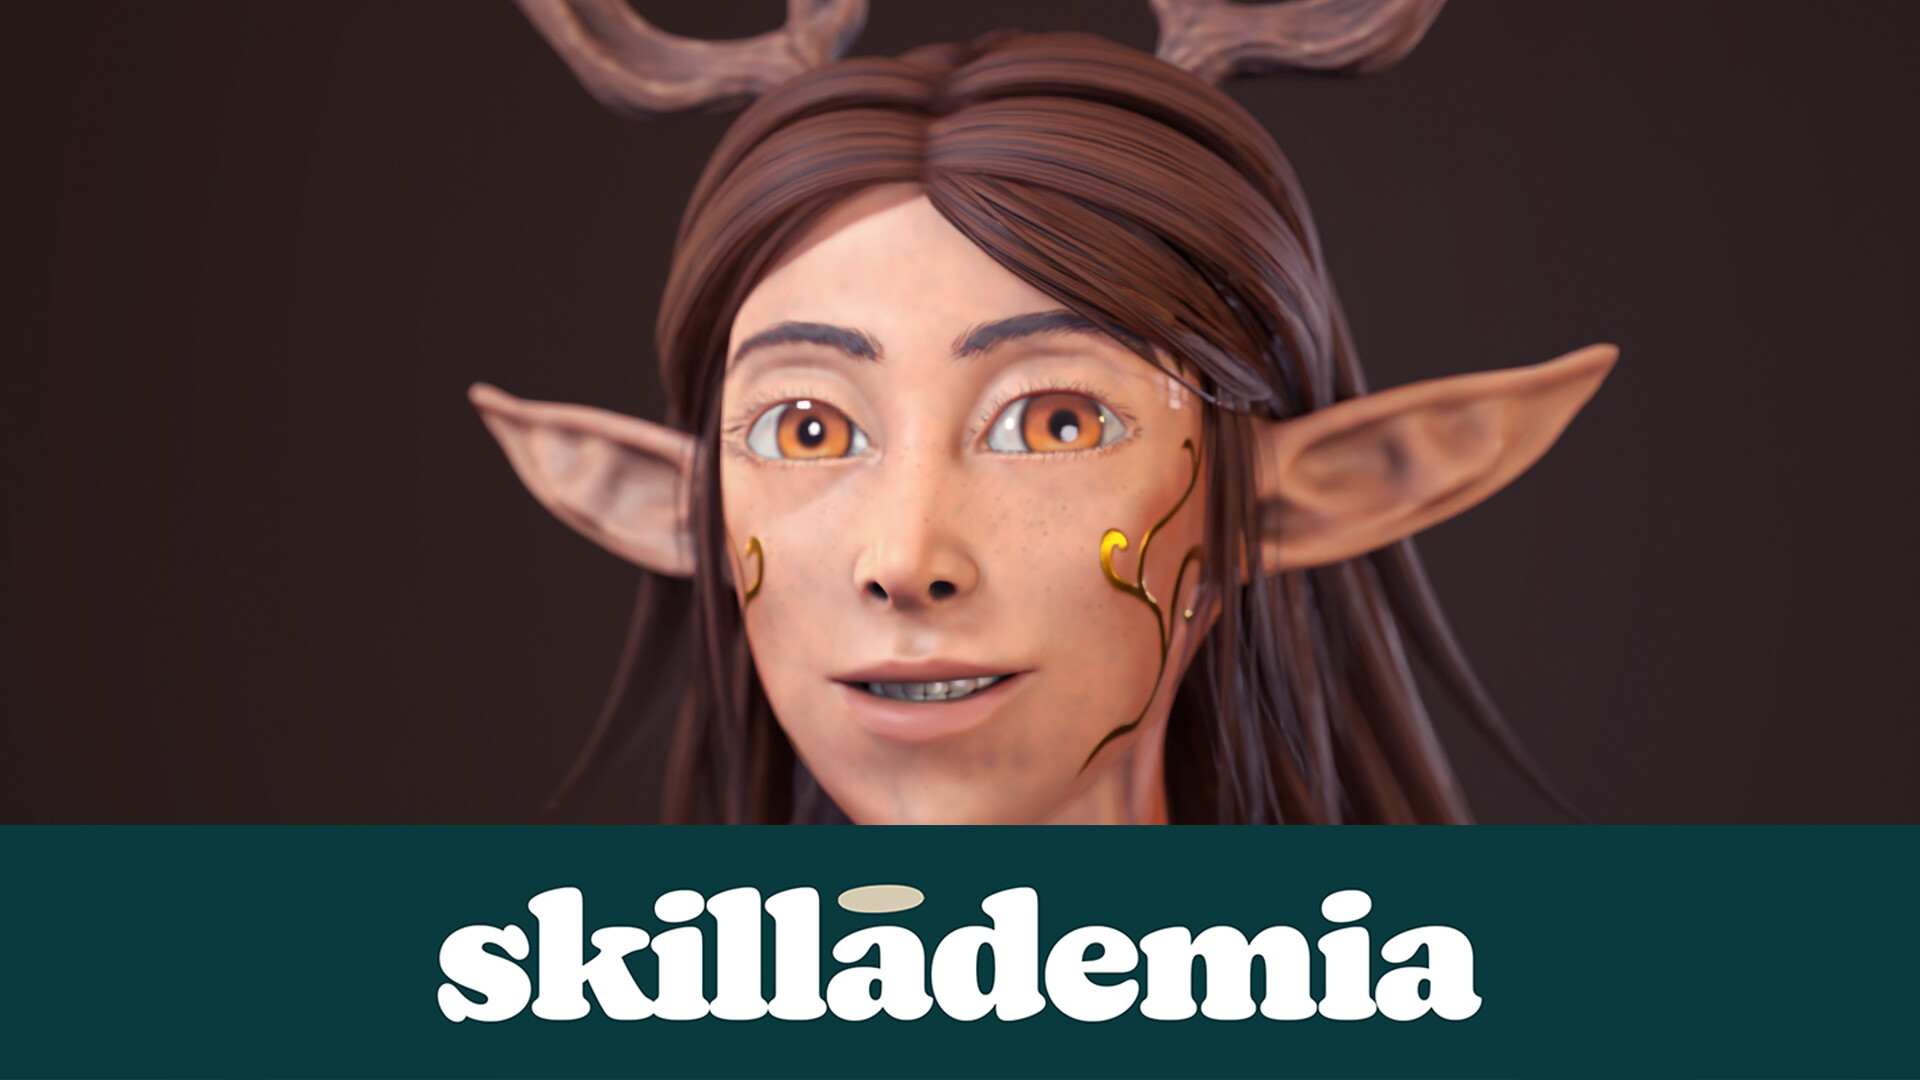 Skillademia Character Development #2